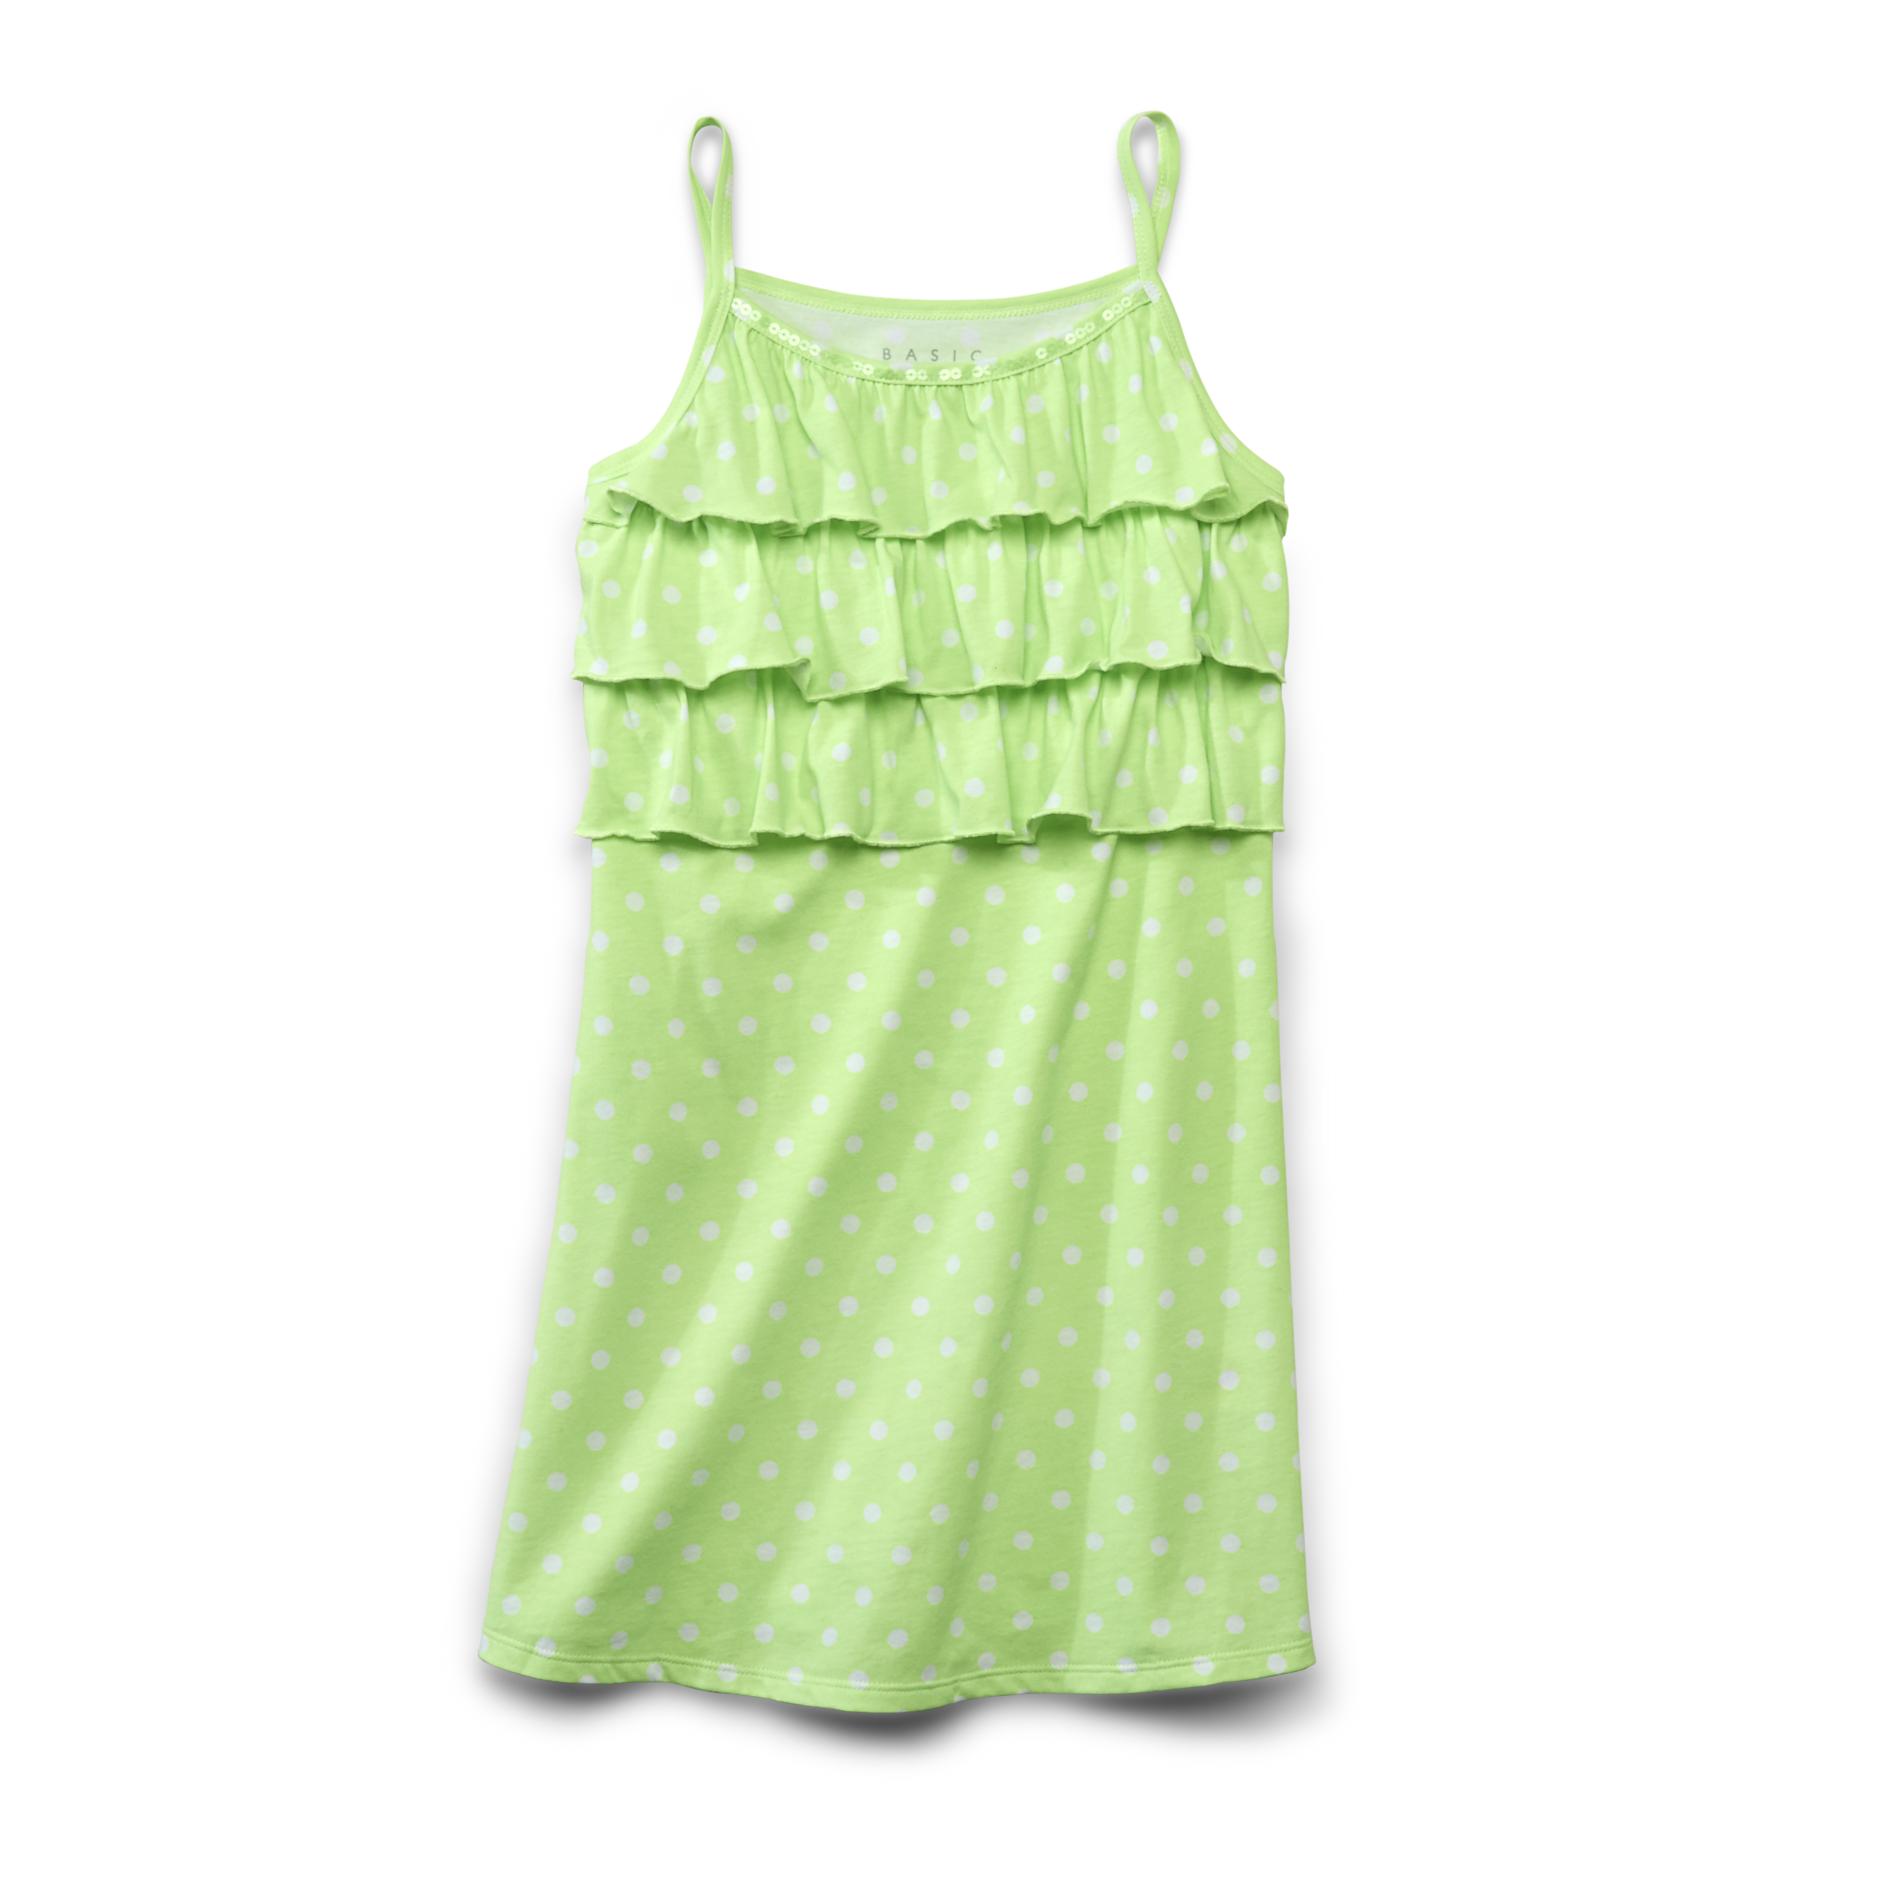 Basic Editions Girl's Ruffled Dress - Polka Dot